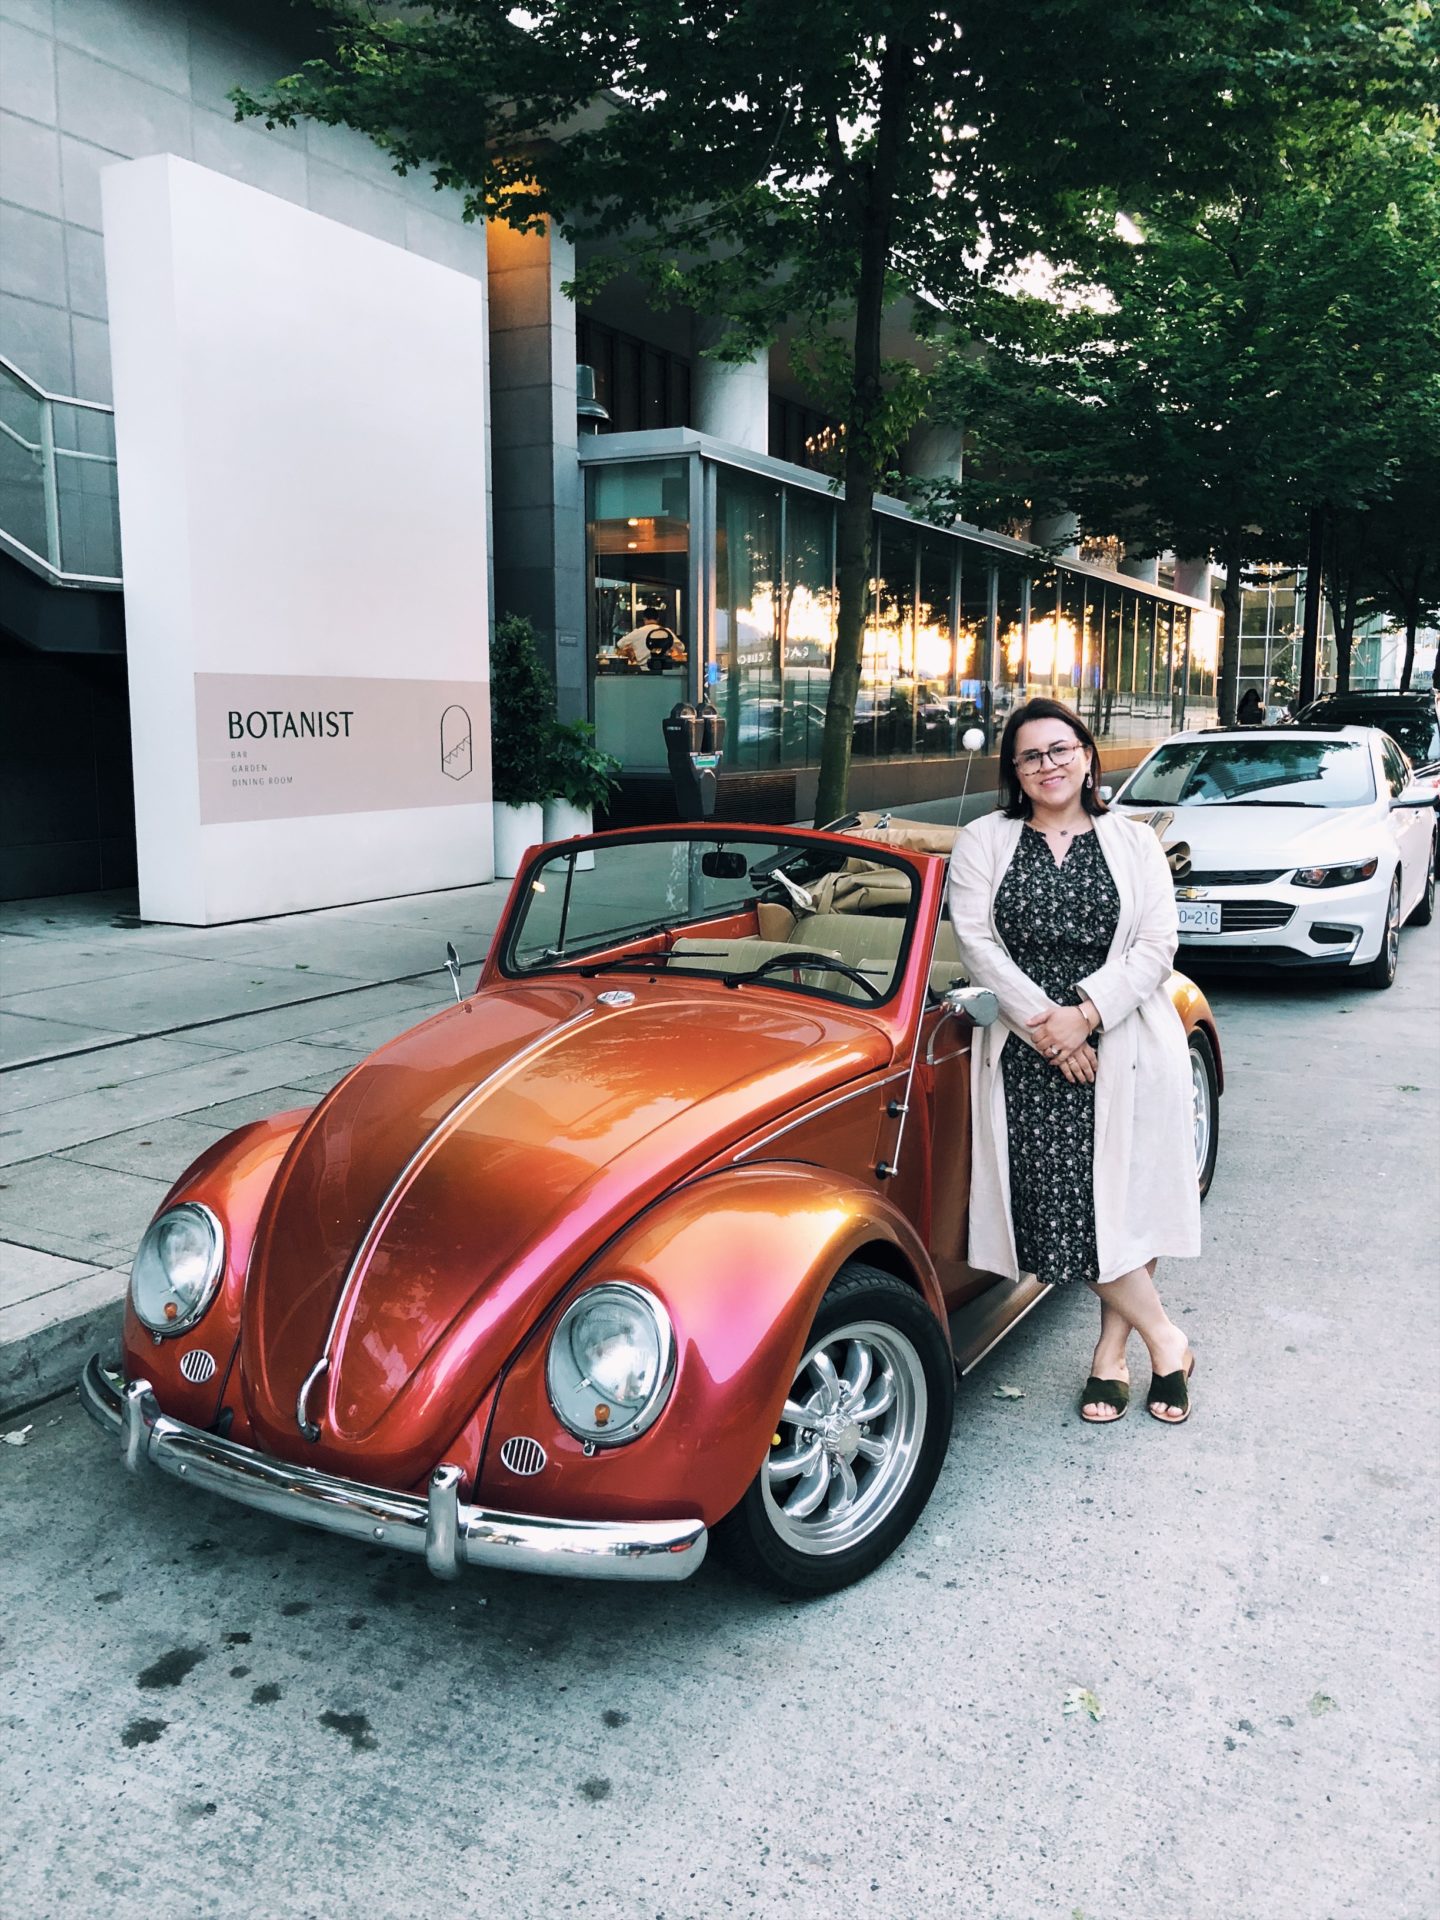 1967 VW Beetle | Friday Roundup July 6